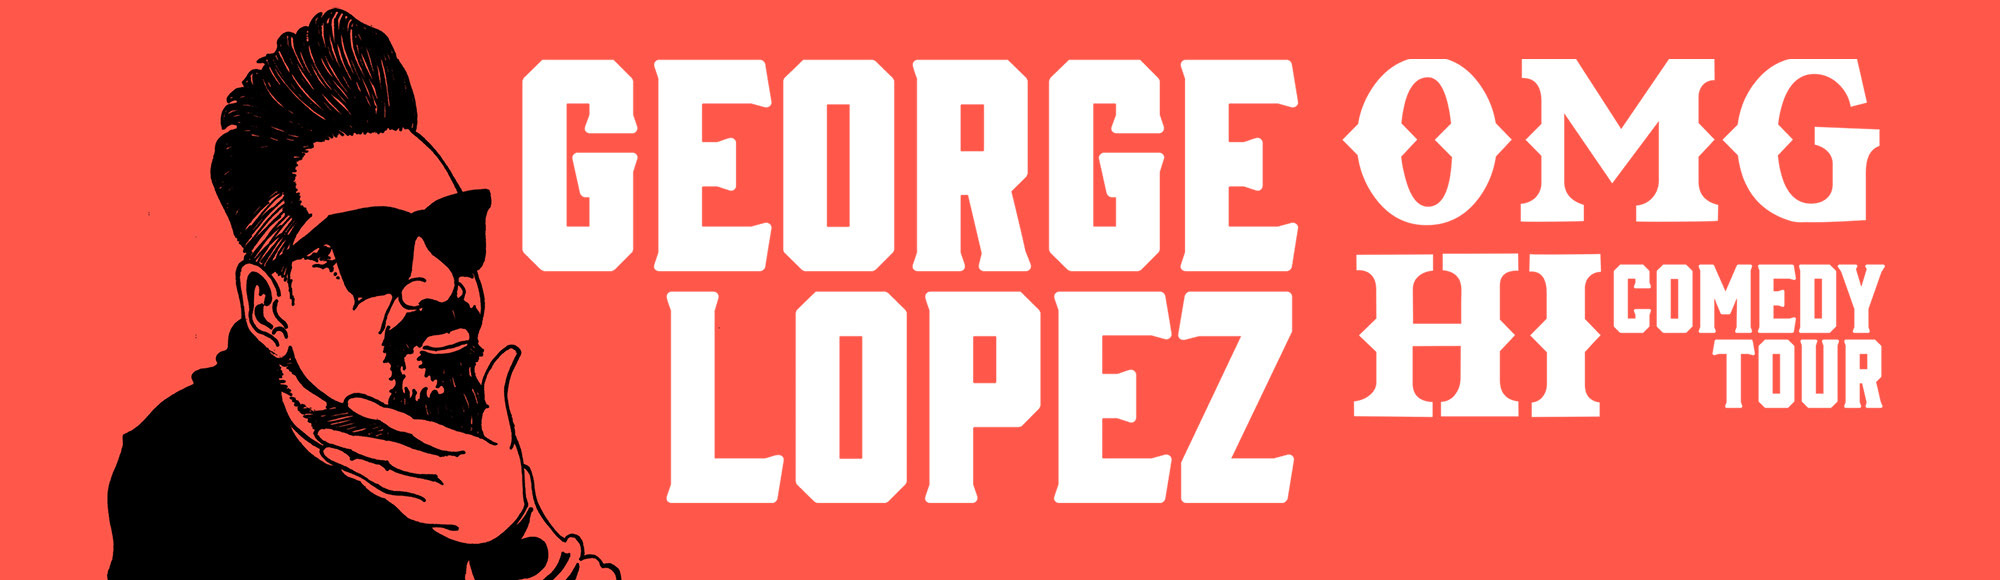 George Lopez show